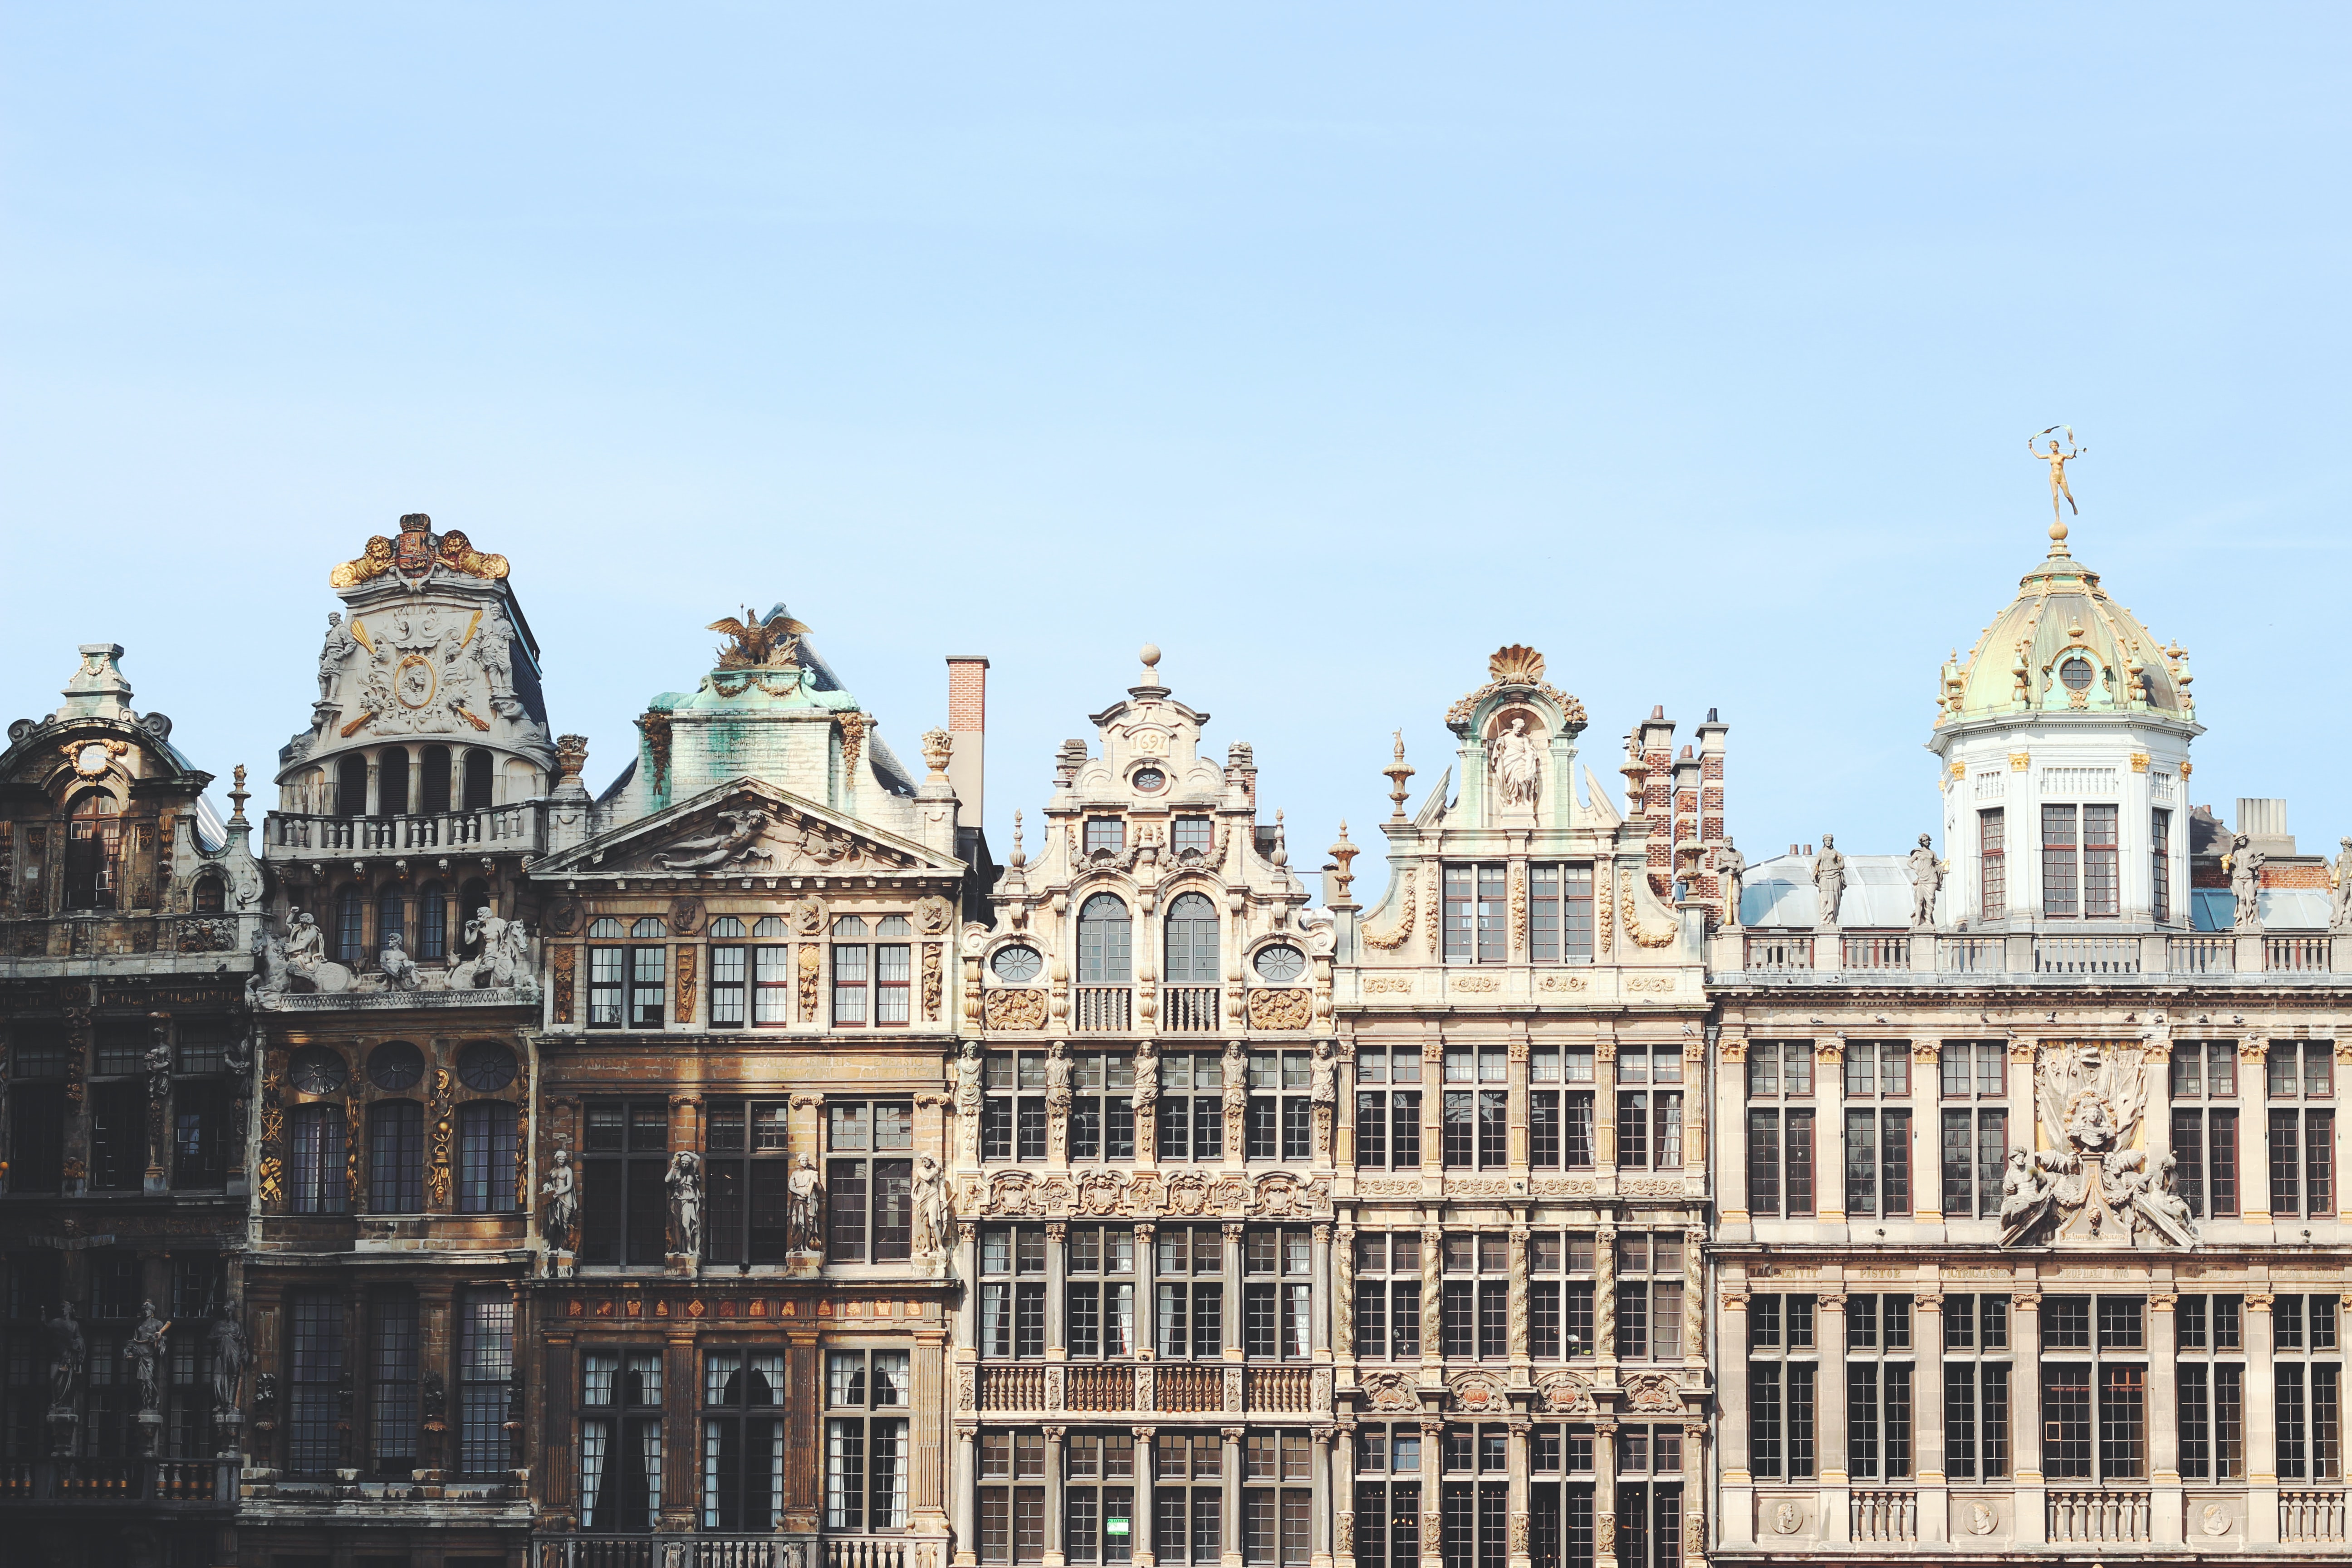 Facade view of buildings in Brussels, Belgium